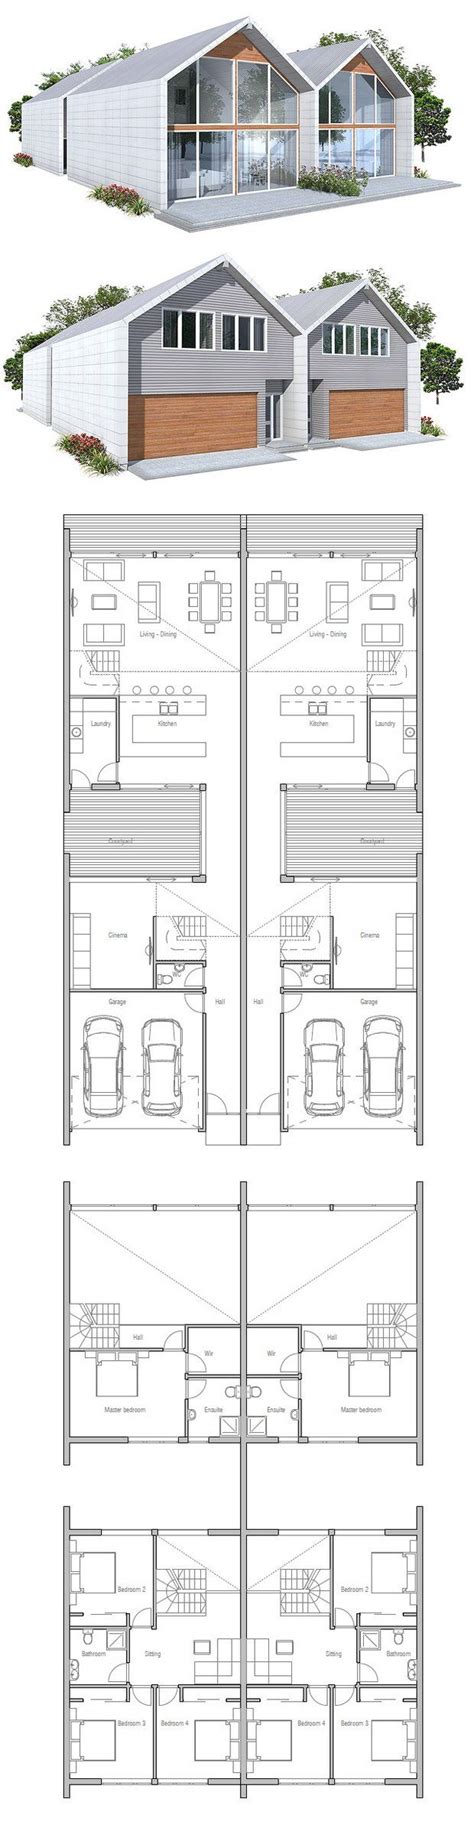 duplex house plan  narrow lot  bed plans pinterest duplex house plans house  ships